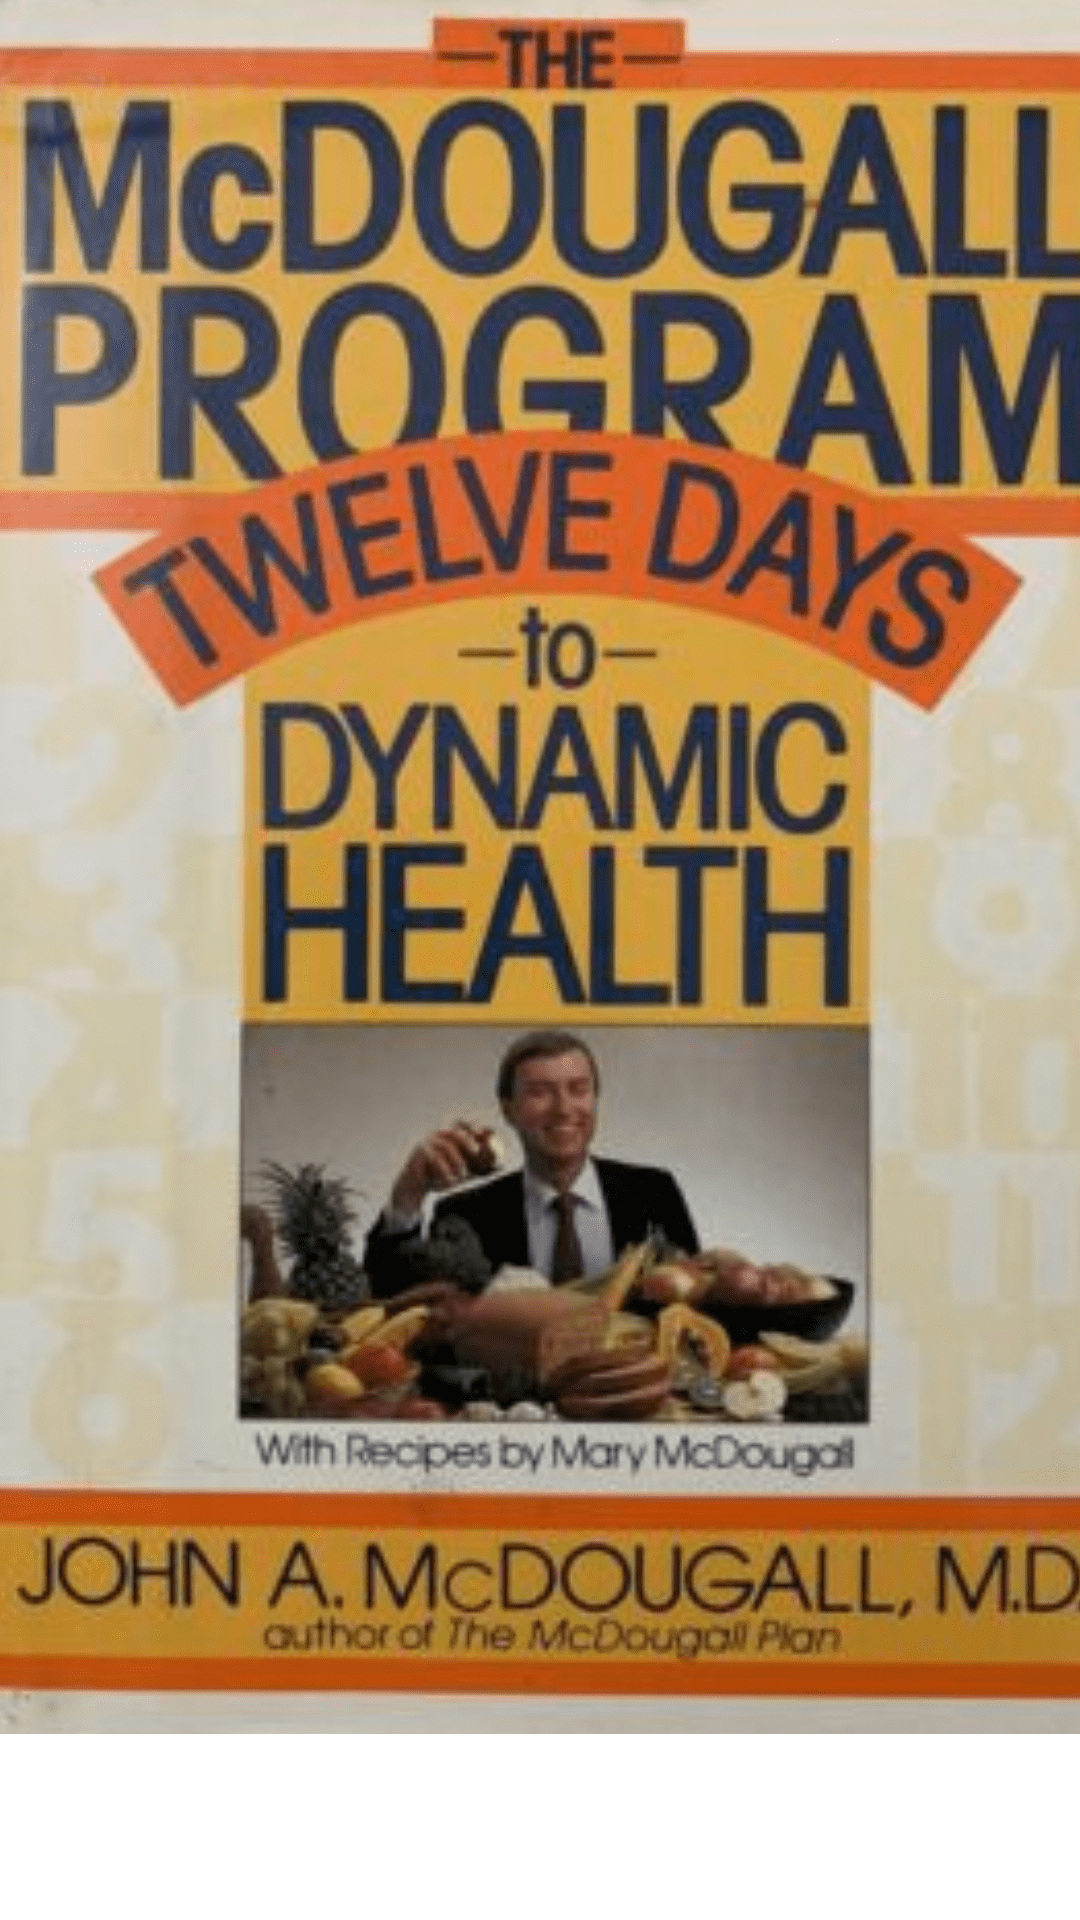 Mcdougall Program to Dynamic Health: Twelve Days